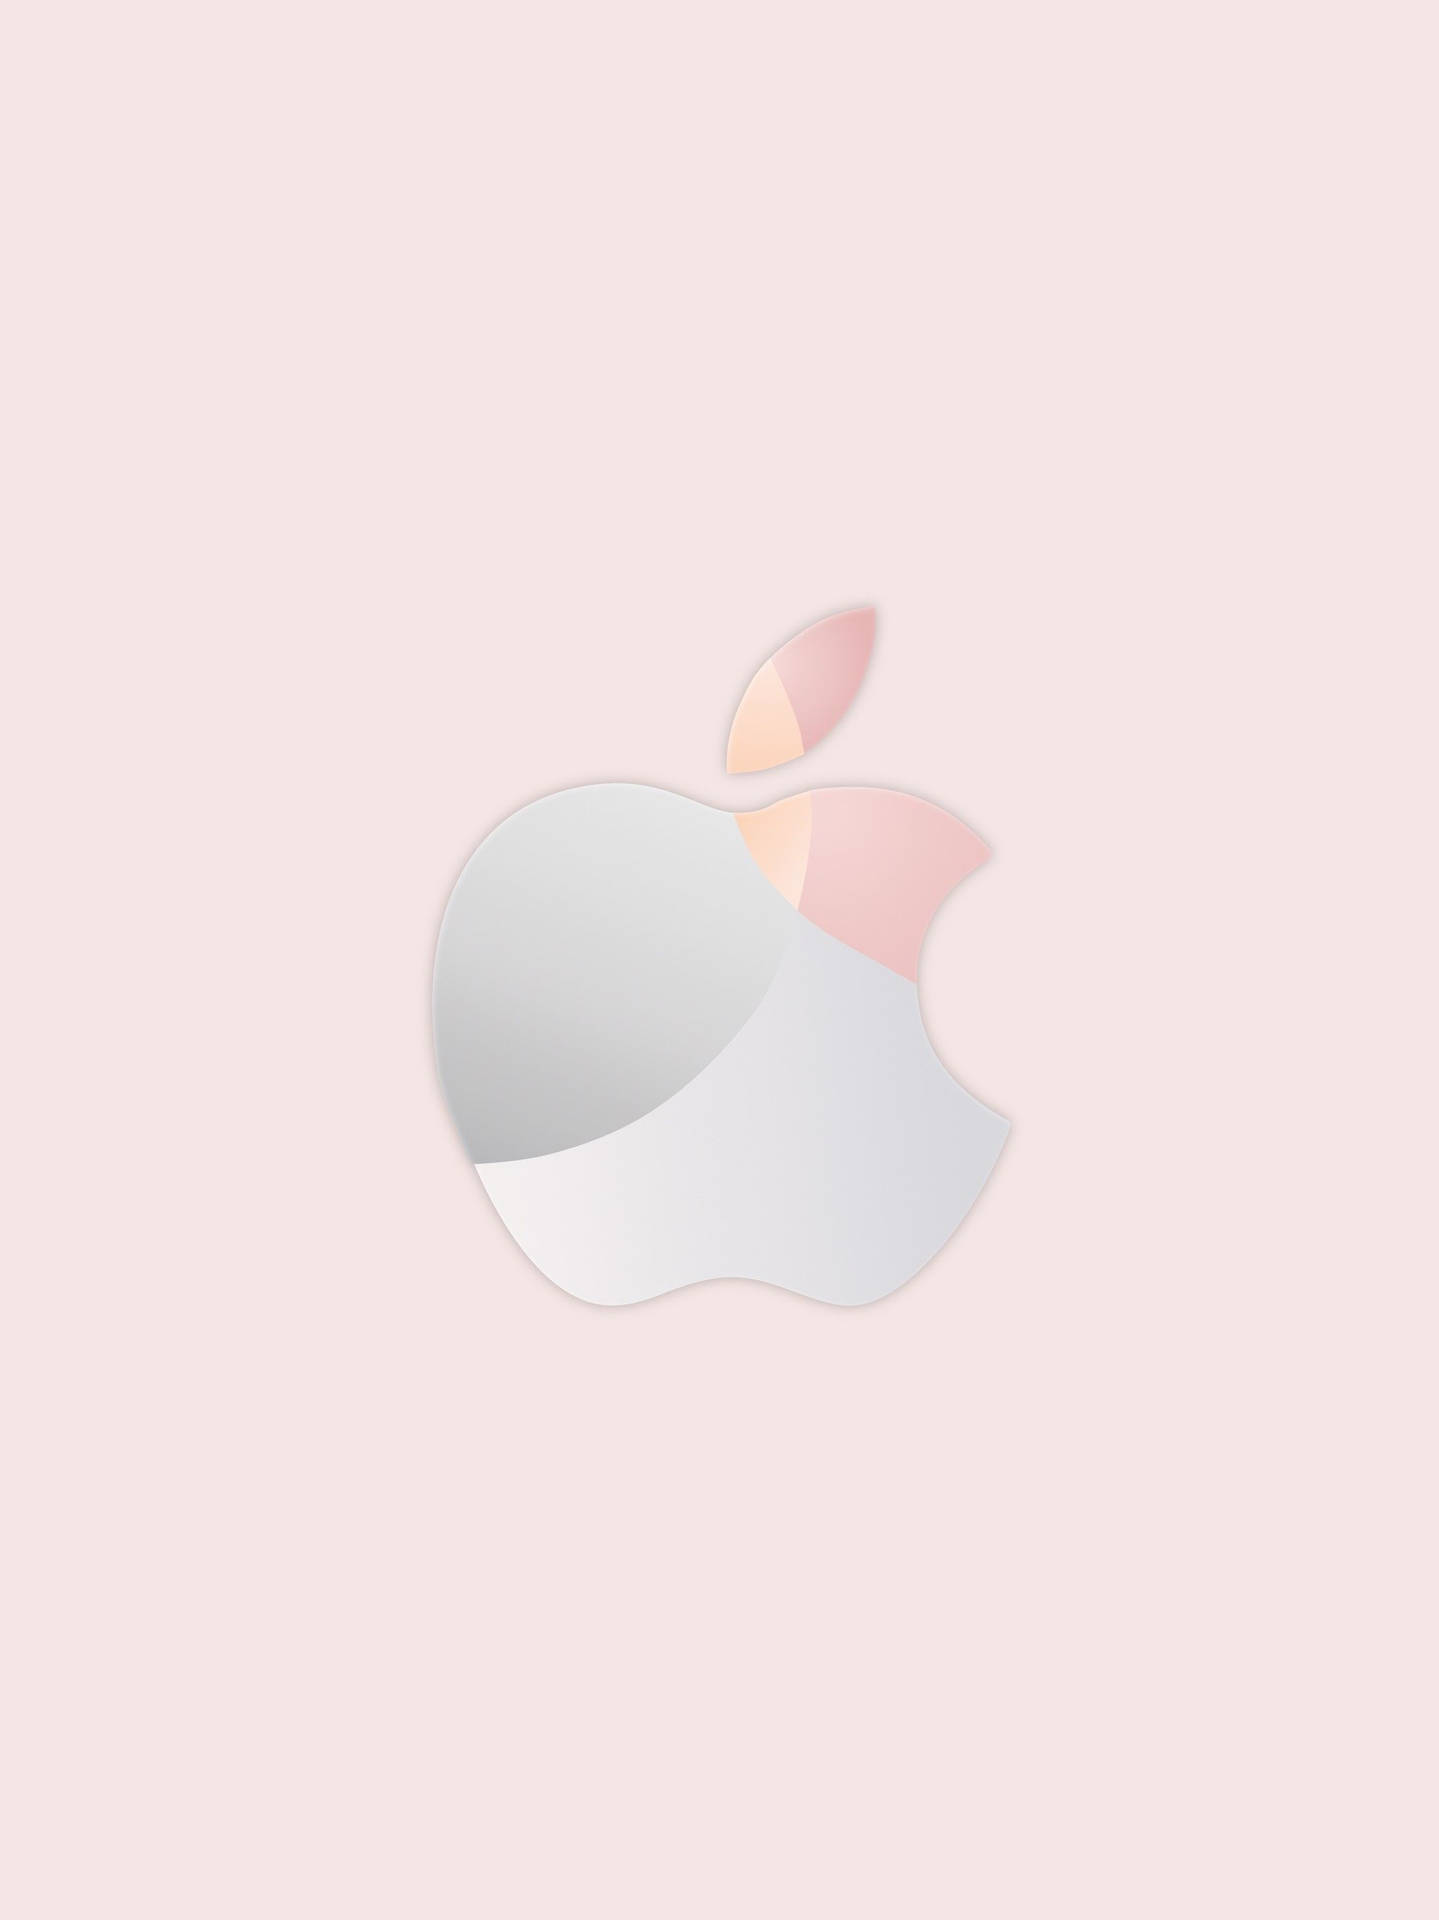 Rose Gold Ipad Simple Apple Logo